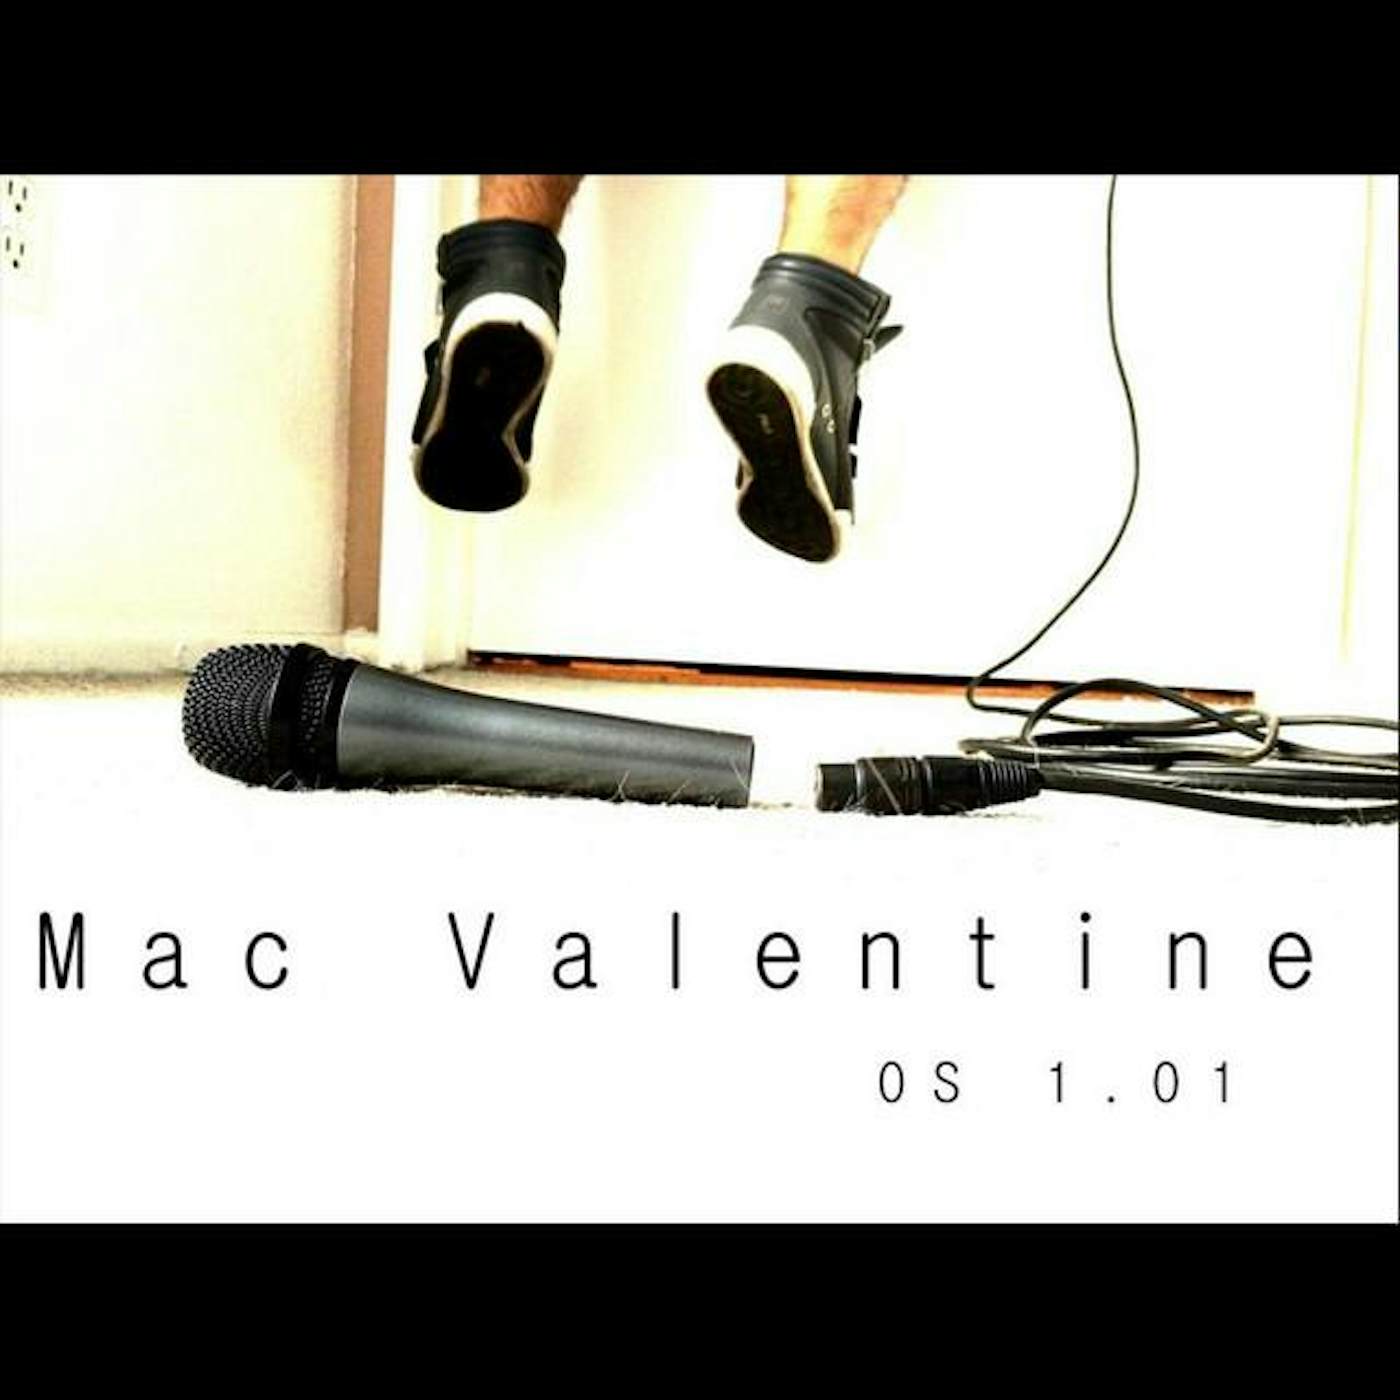 Mac Valentine